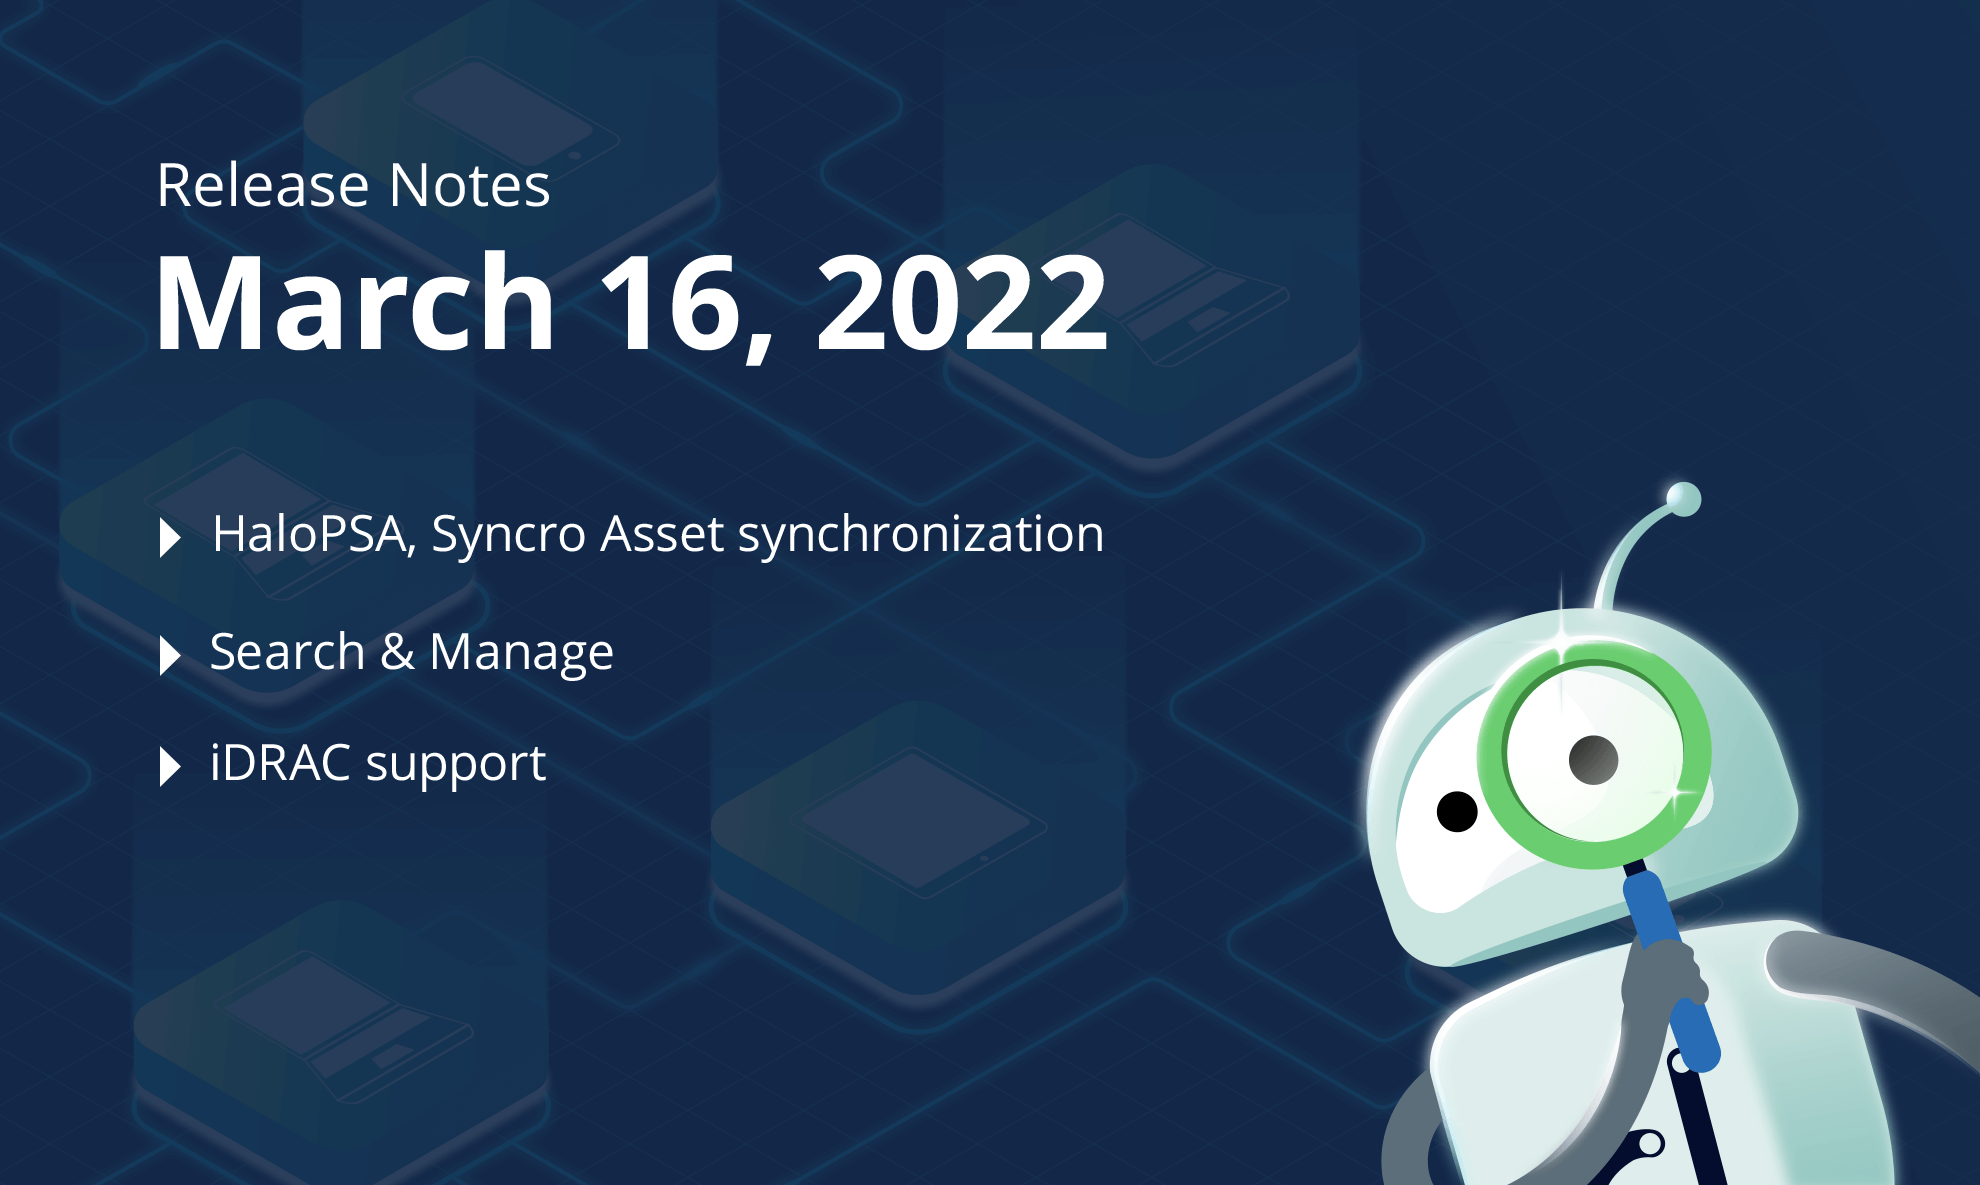 March 16, 2022 – HaloPSA, Syncro Asset synchronization, Search & Manage, iDRAC support